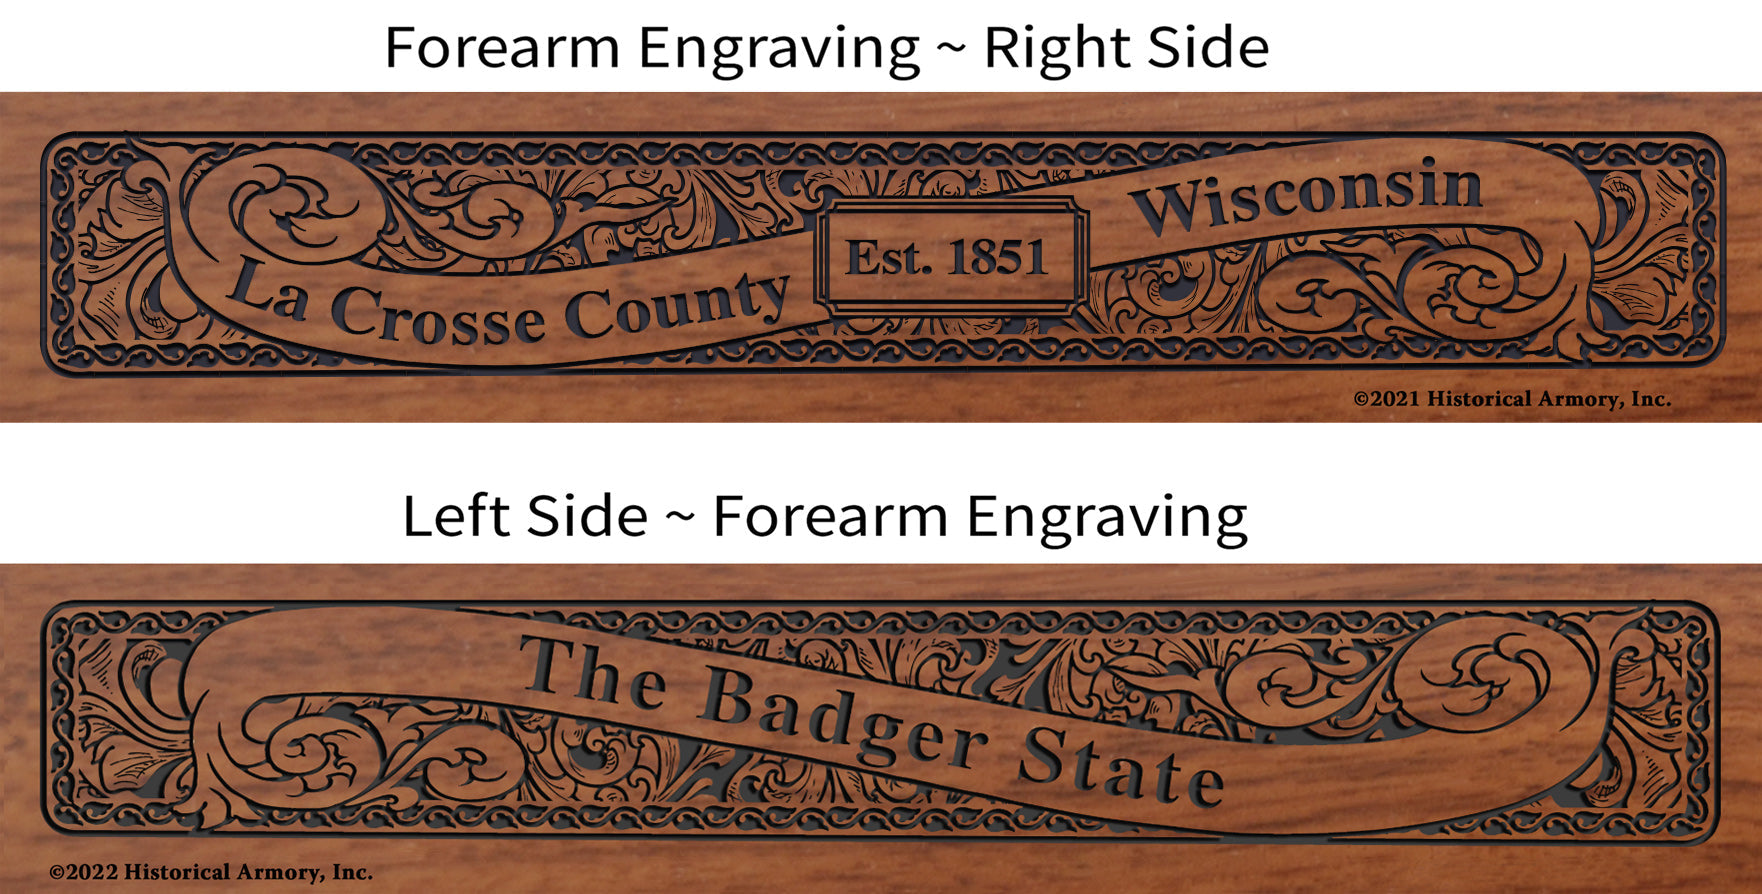 La Crosse County Wisconsin Engraved Rifle Forearm